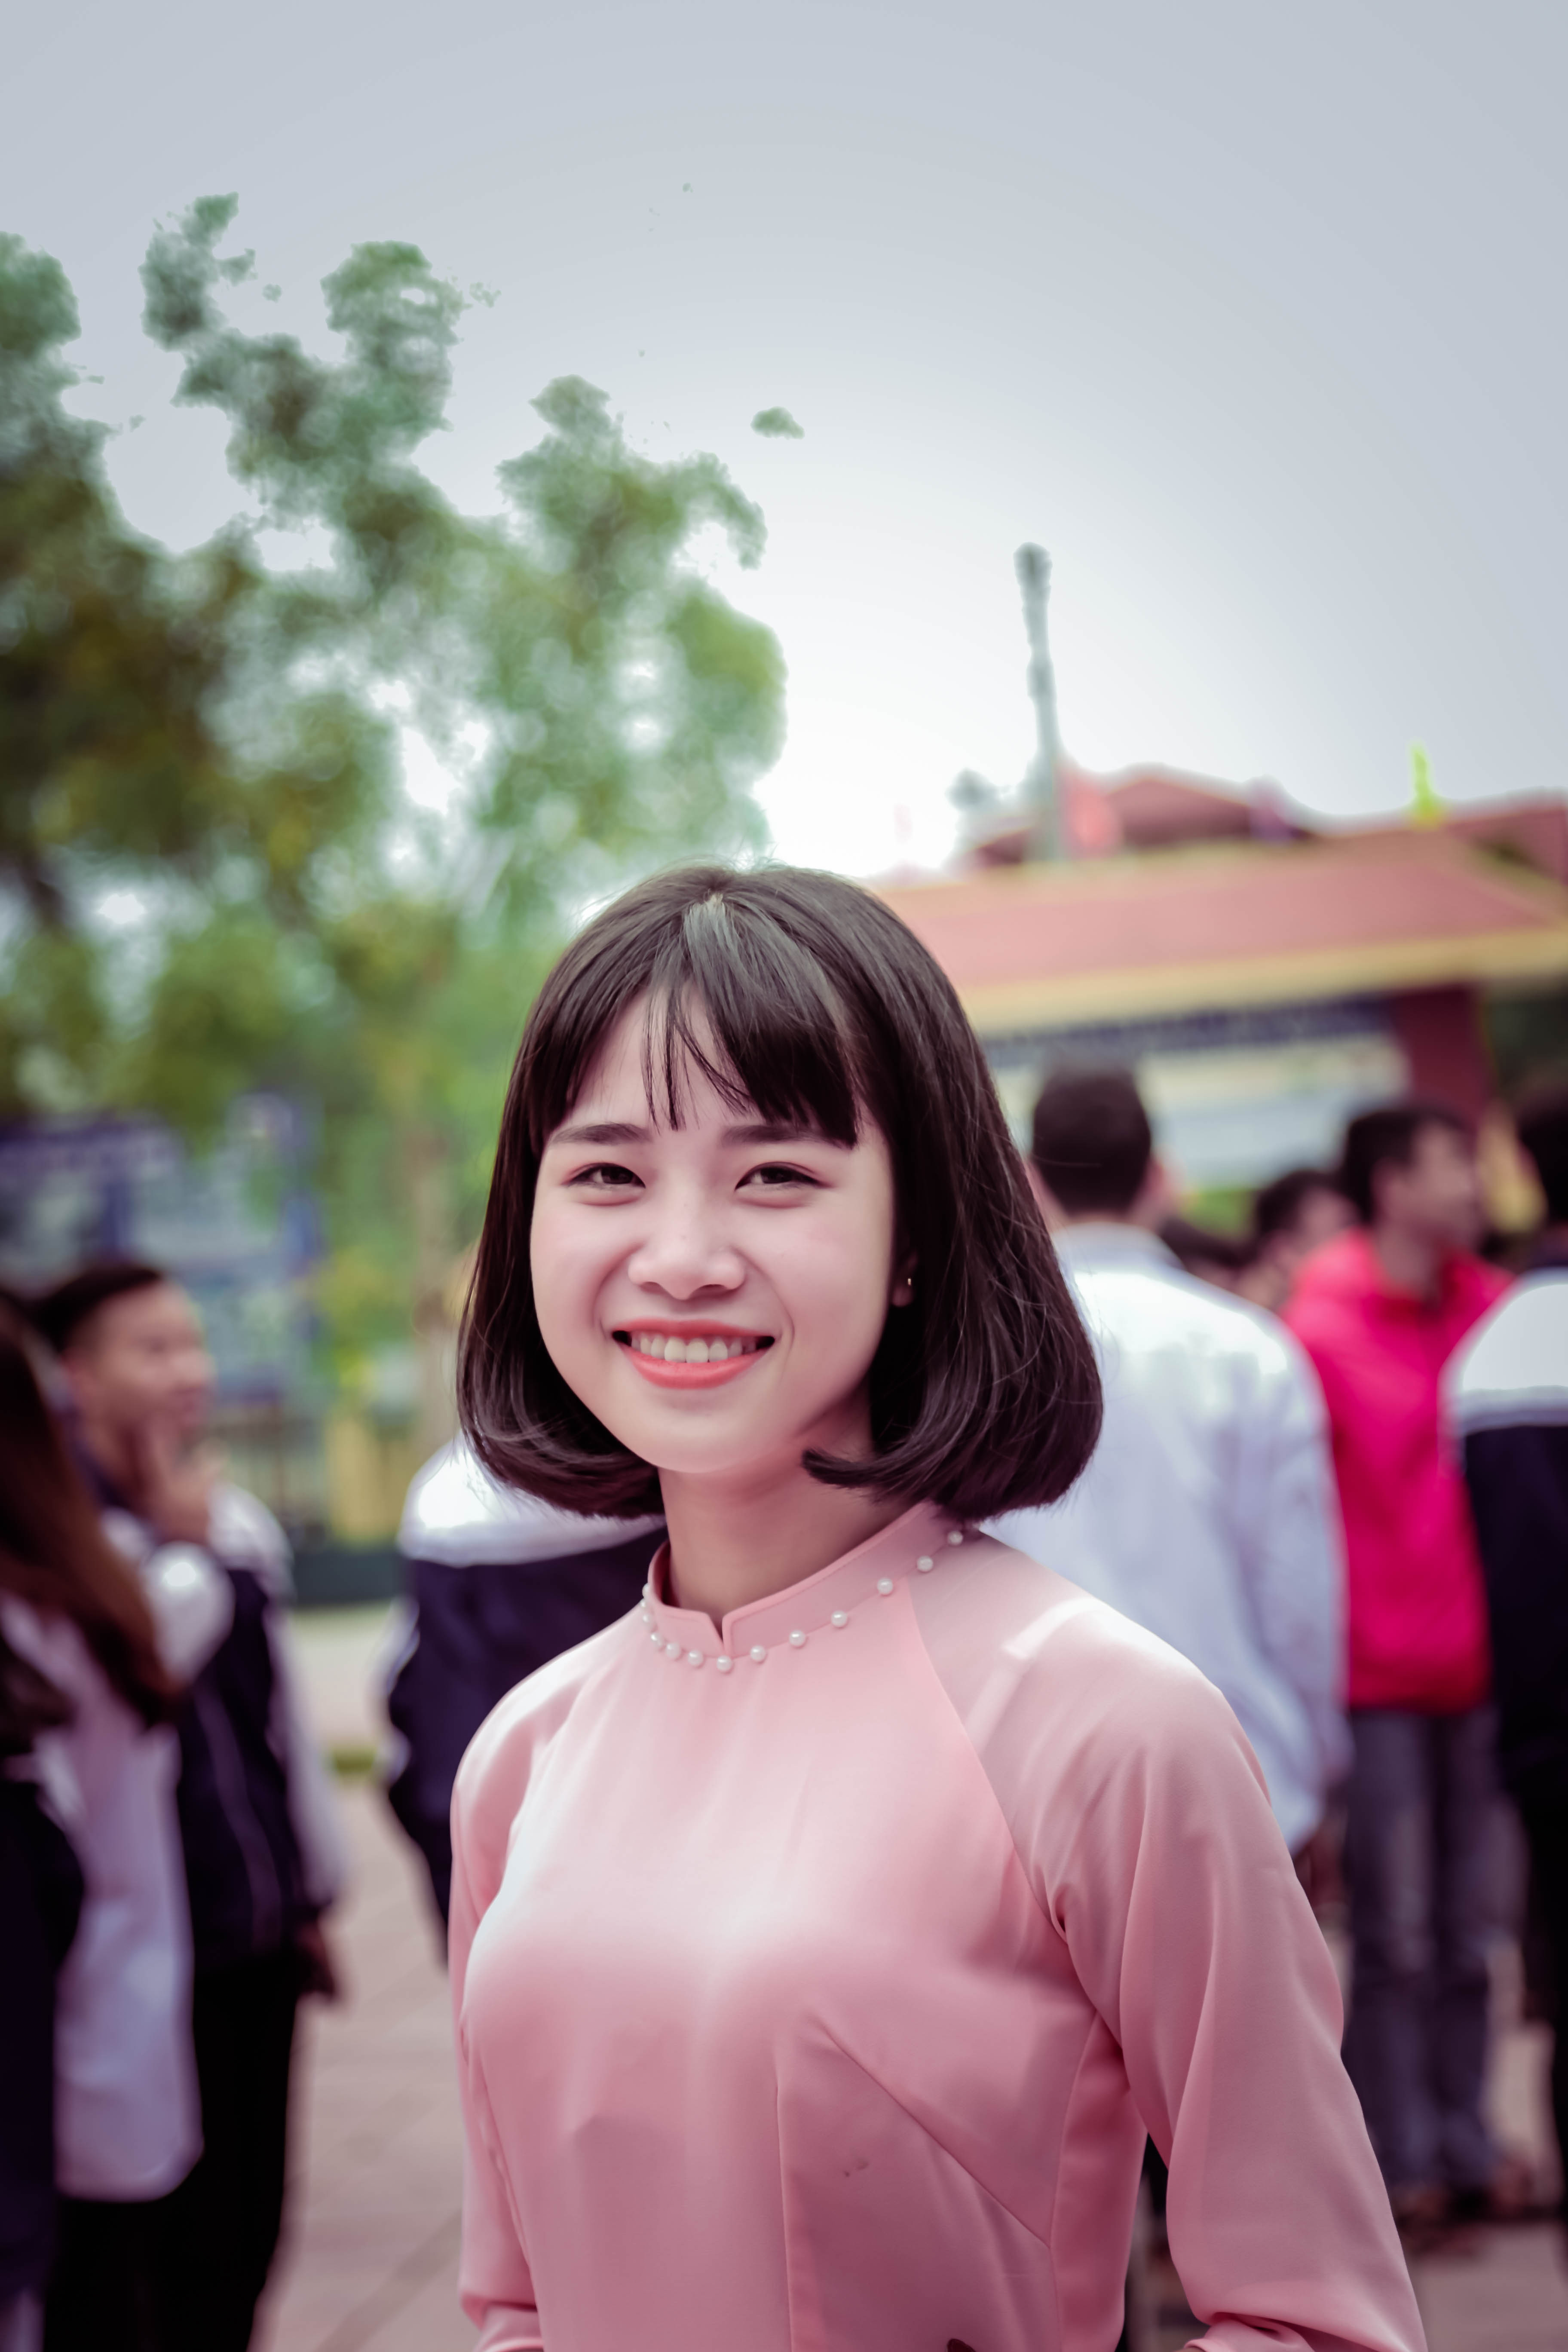 With Cute Asian Girl Photos – Telegraph